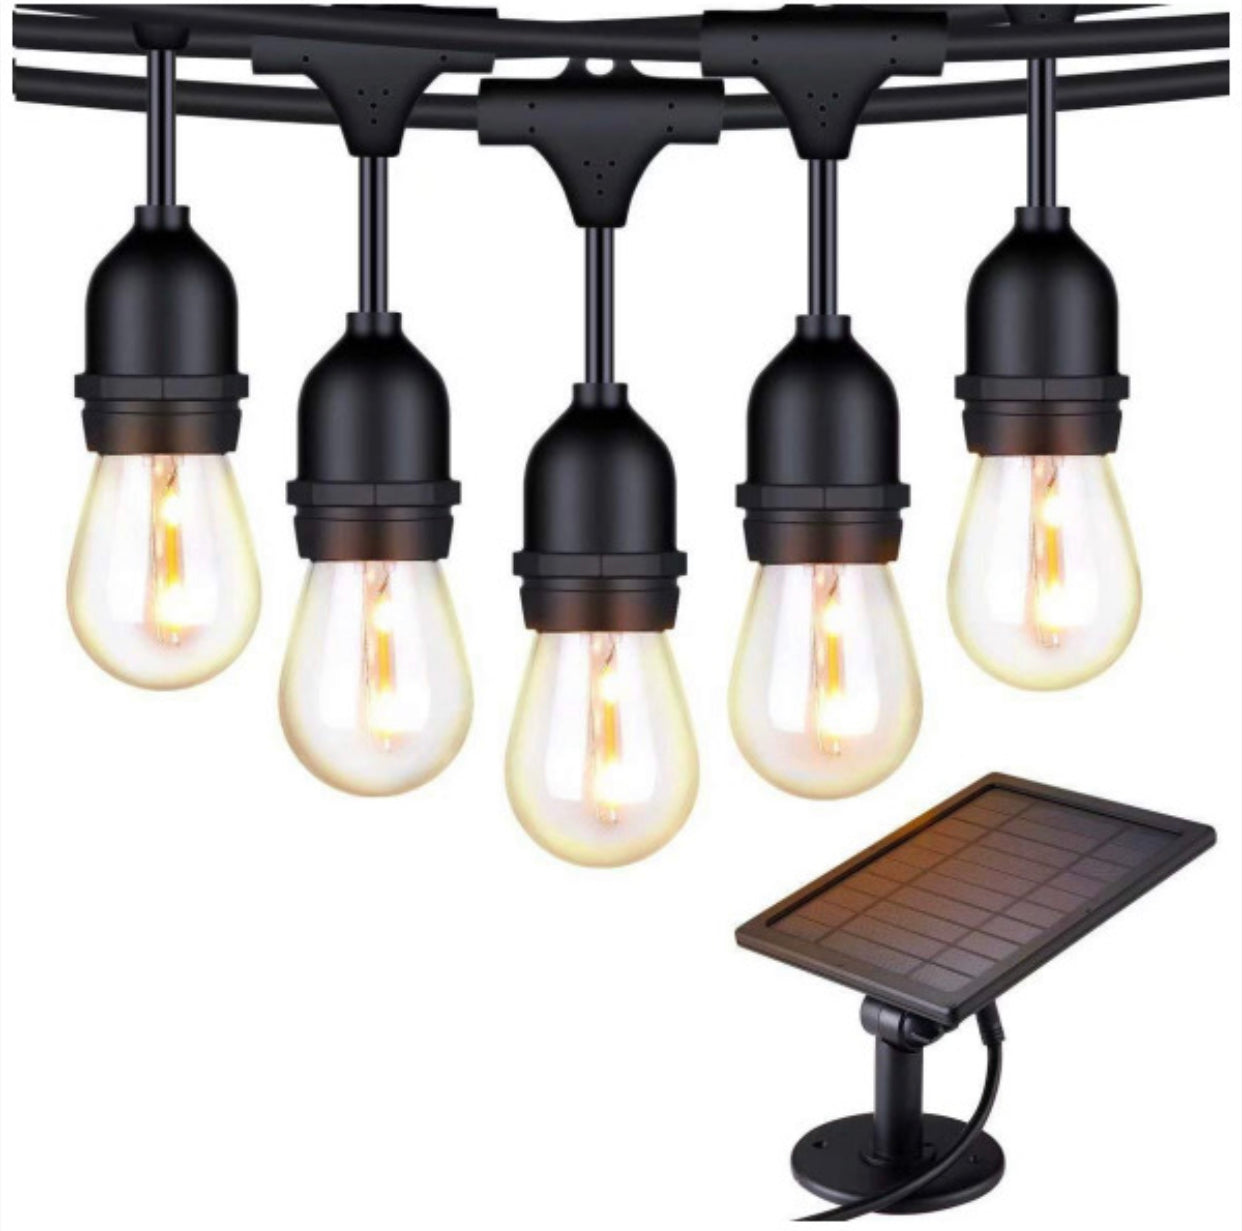 27F Solar Powered String Lights Waterproof LED Hanging Edison Bulb Lights with 12 Bulbs